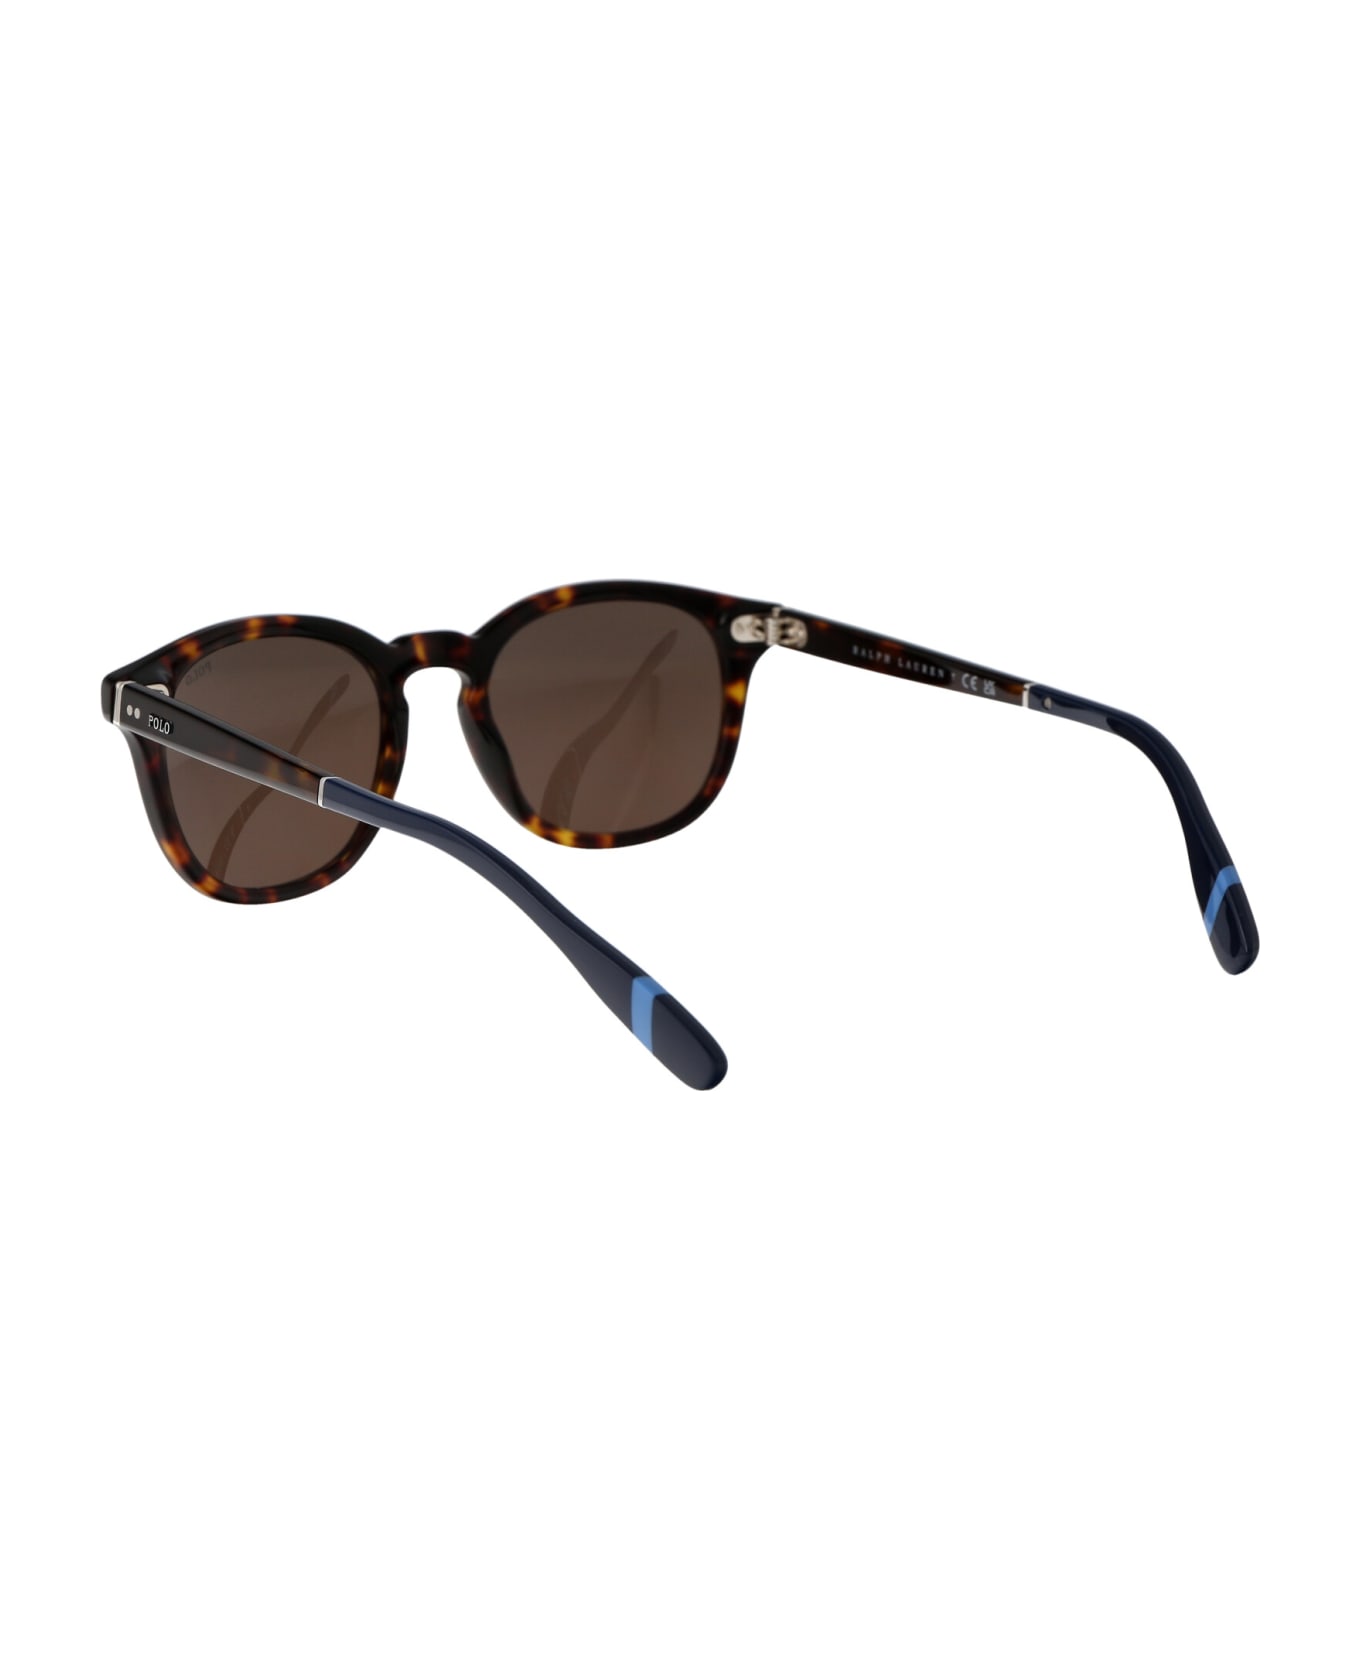 Polo Ralph Lauren 0ph4206 Sunglasses - 500373 Shiny Dark Havana サングラス